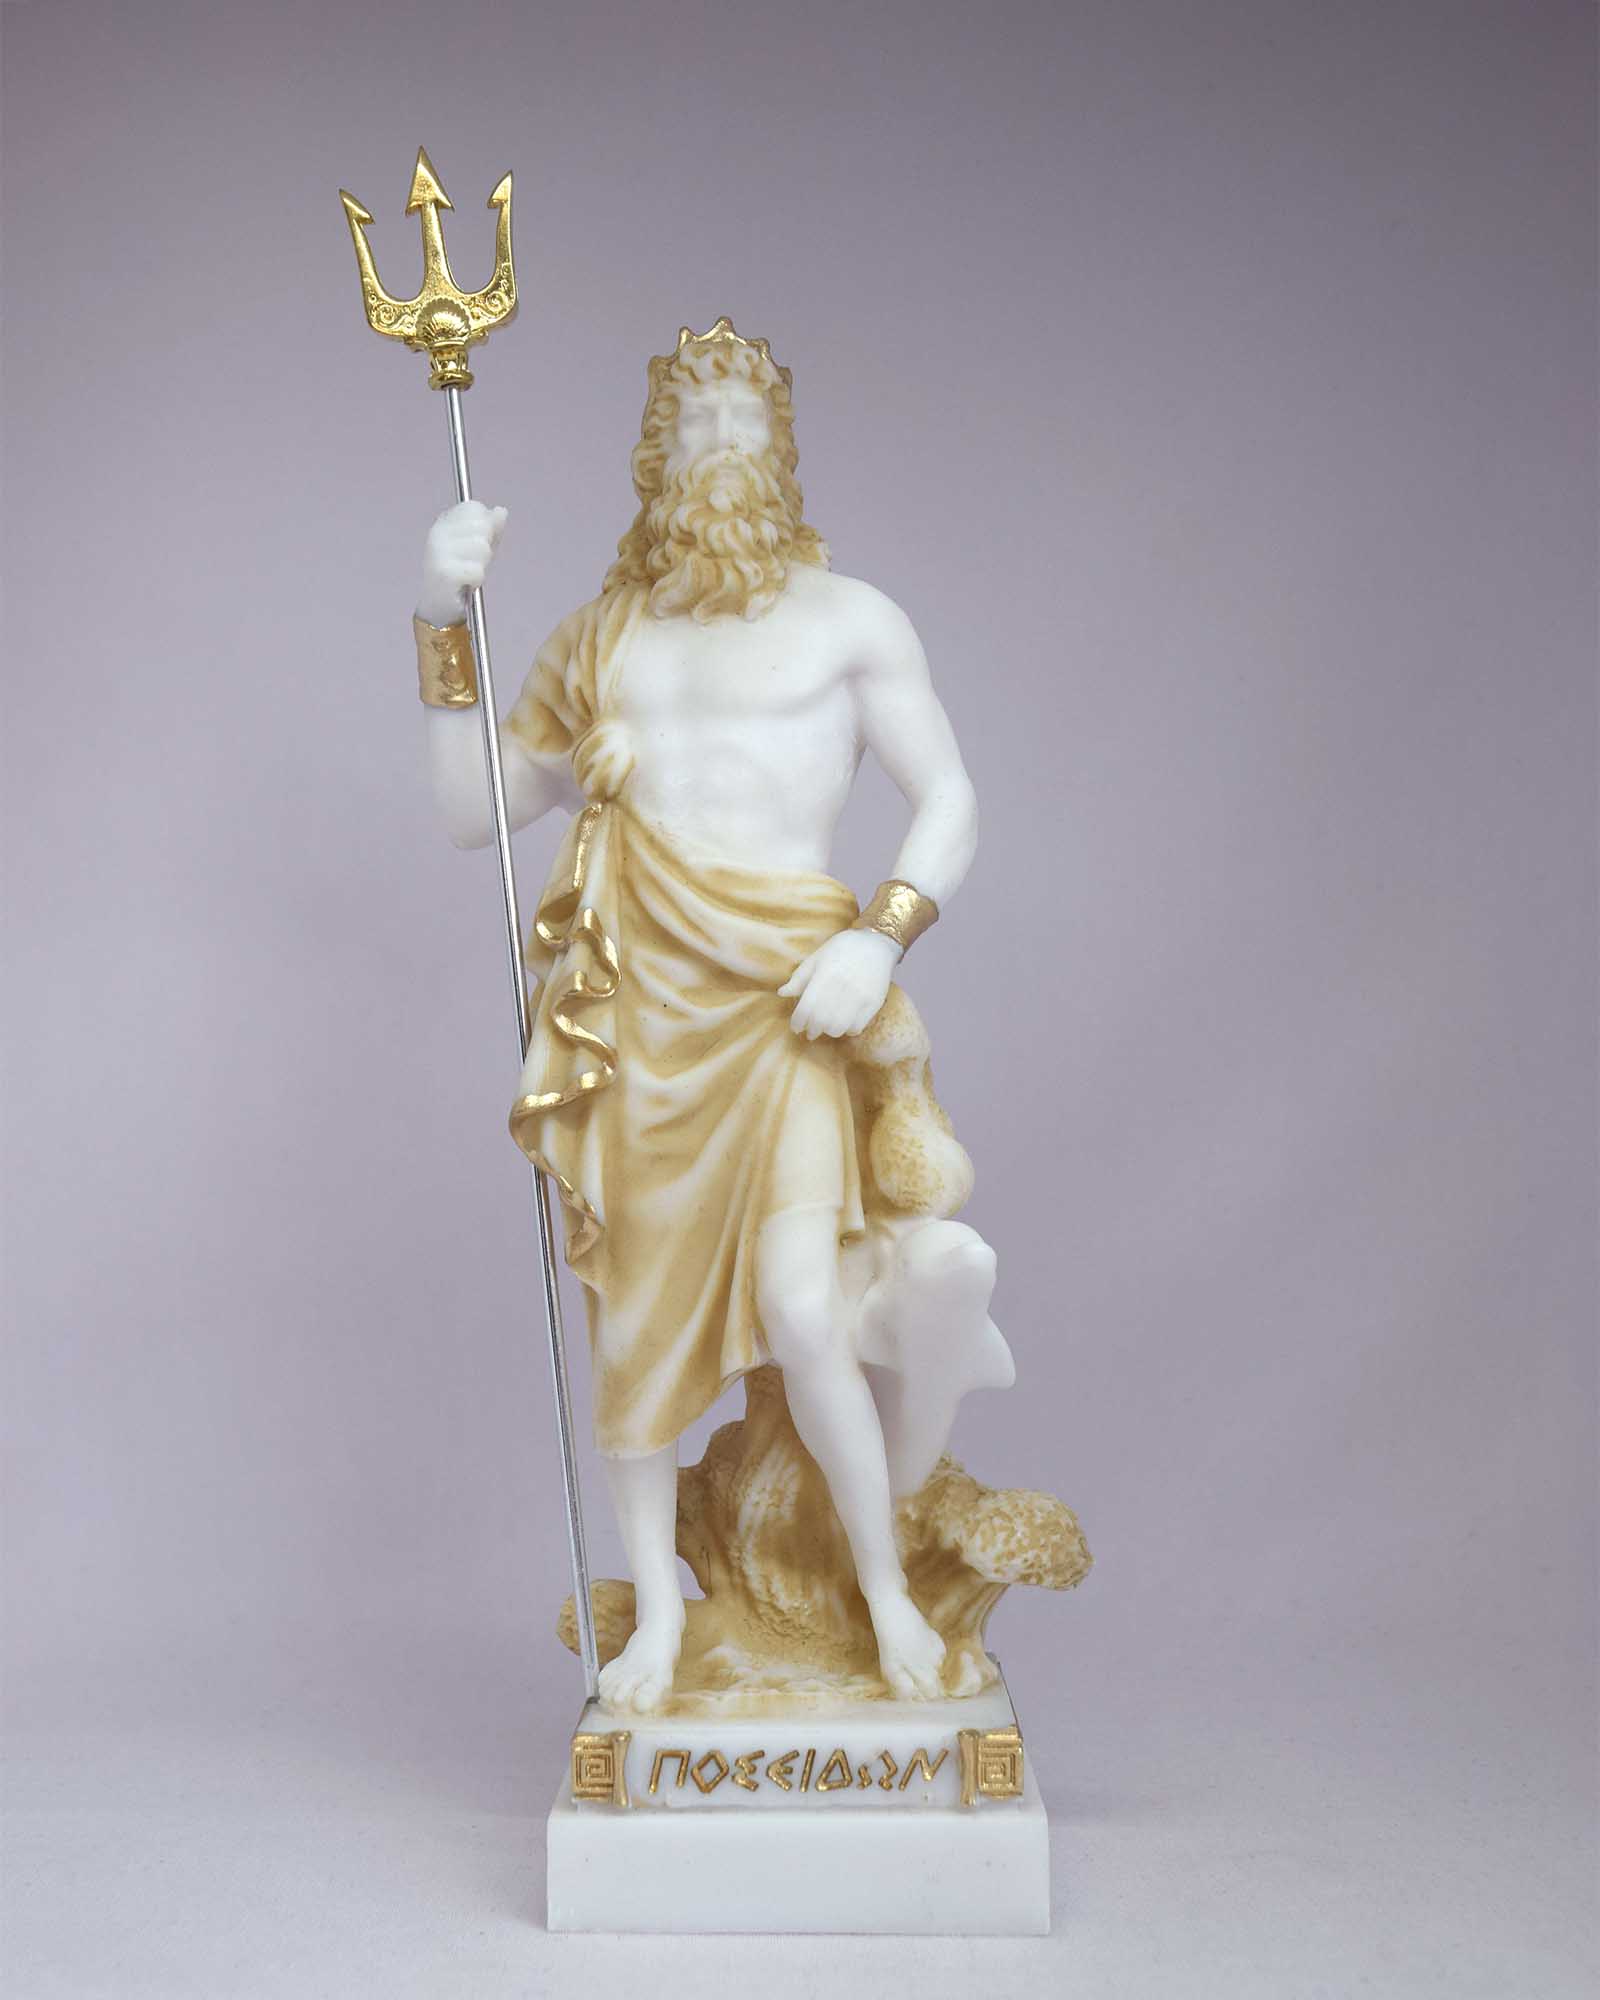 Poseidon sculpture statue ancient Greek God of the sea Neptune aged 